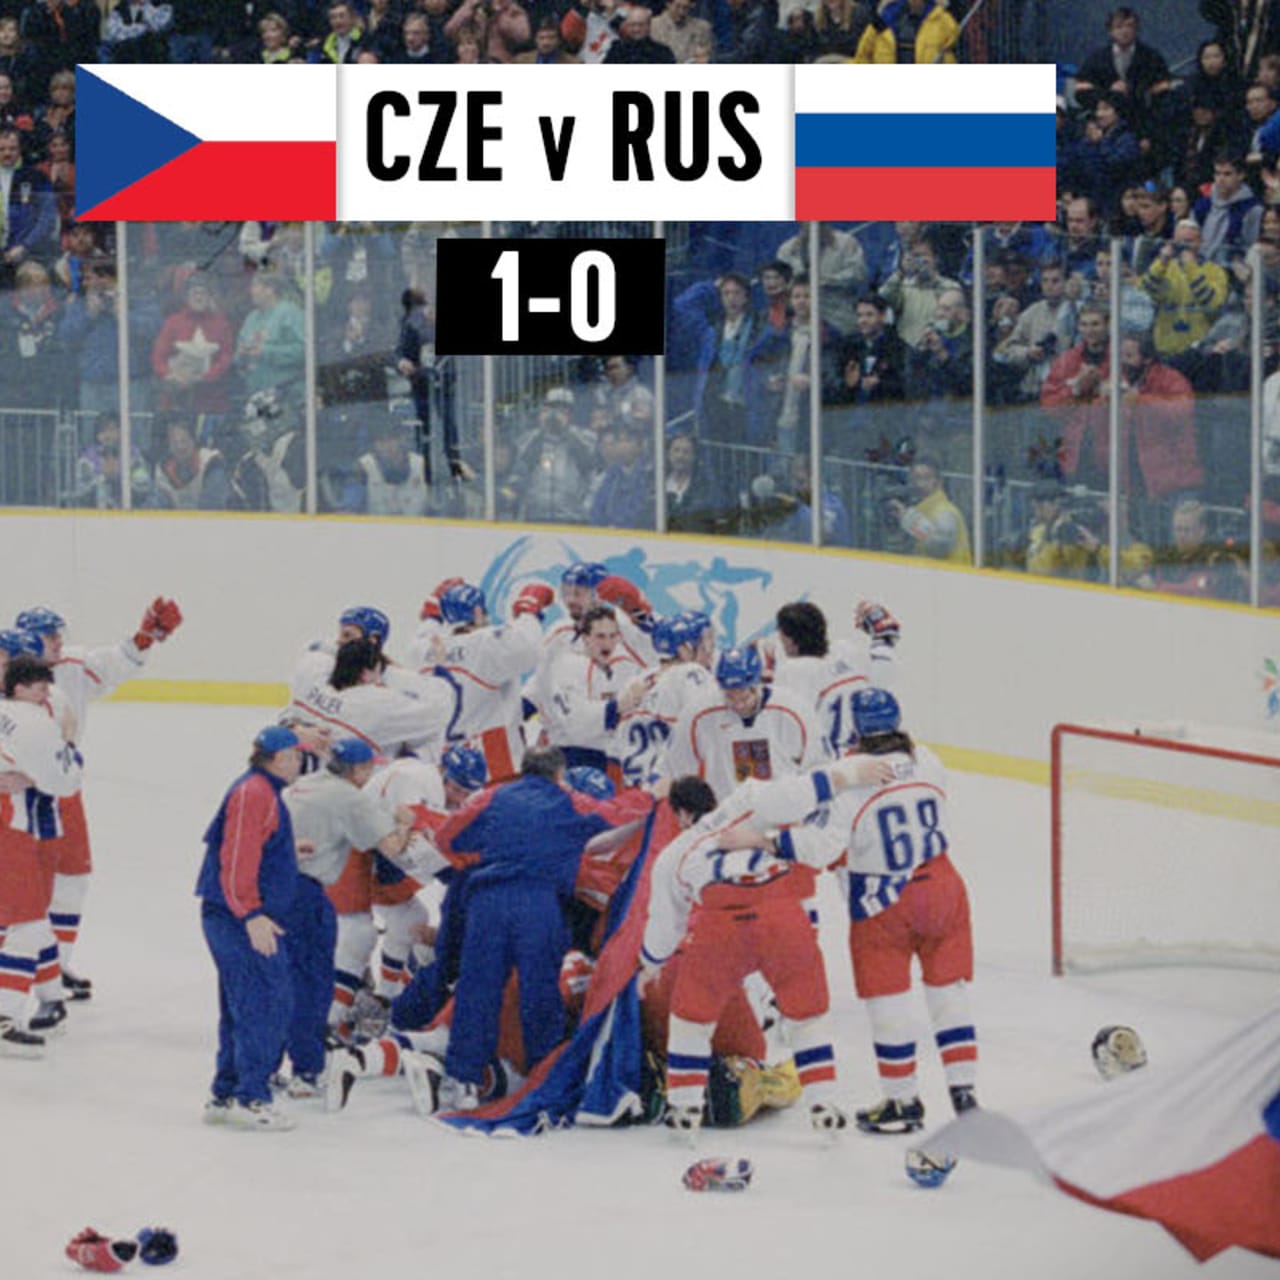 CZE vs RUS, Herren Eishockey Finale Nagano 1998 Wiederholung